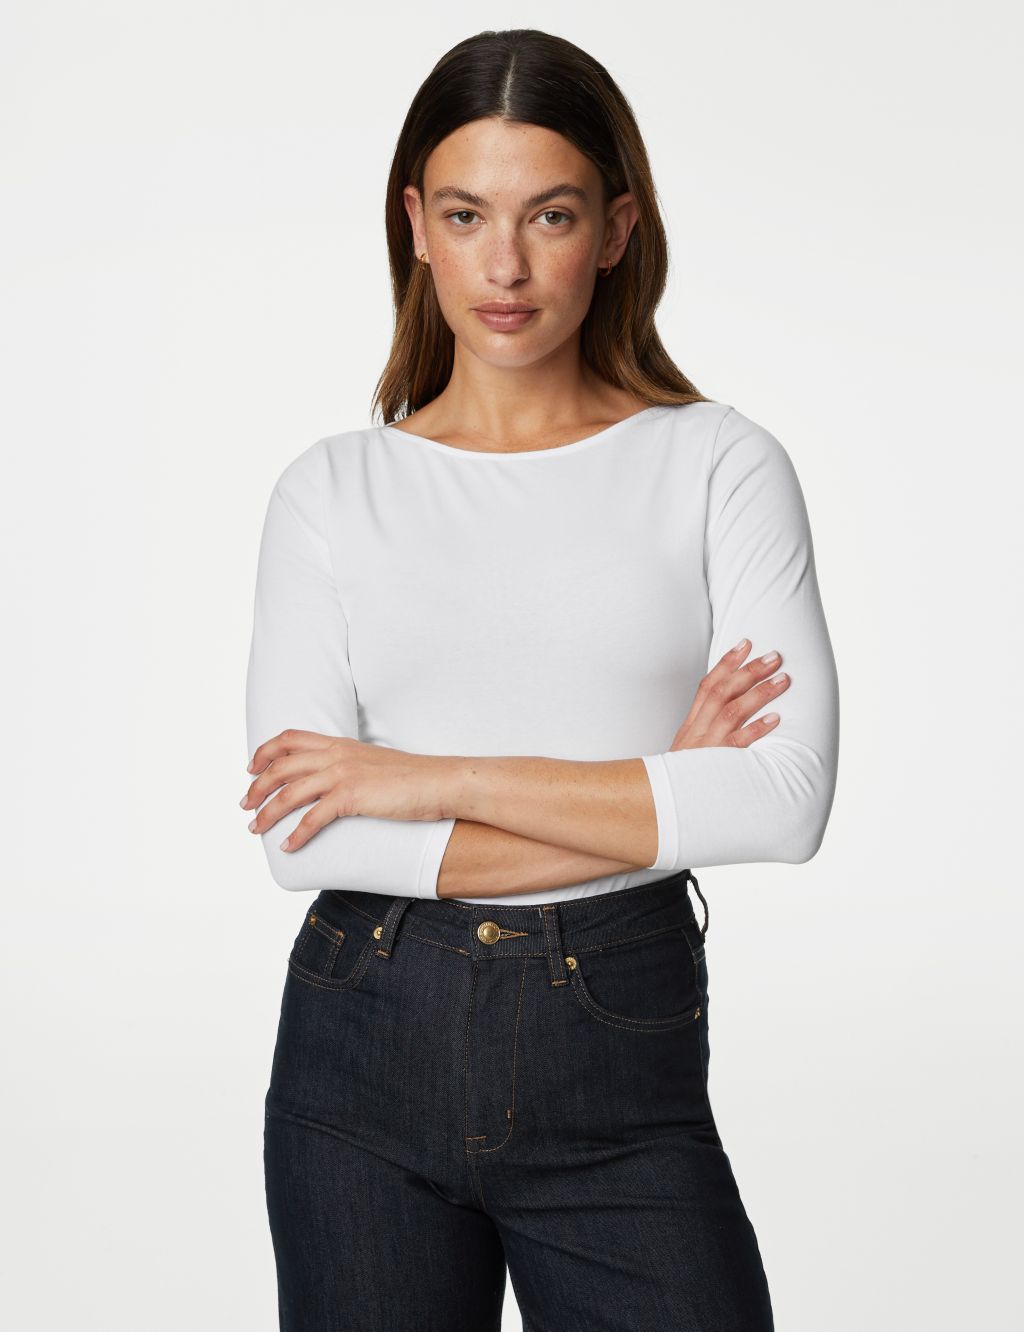 Cotton Rich Slim Fit 3/4 Sleeve T-Shirt image 1